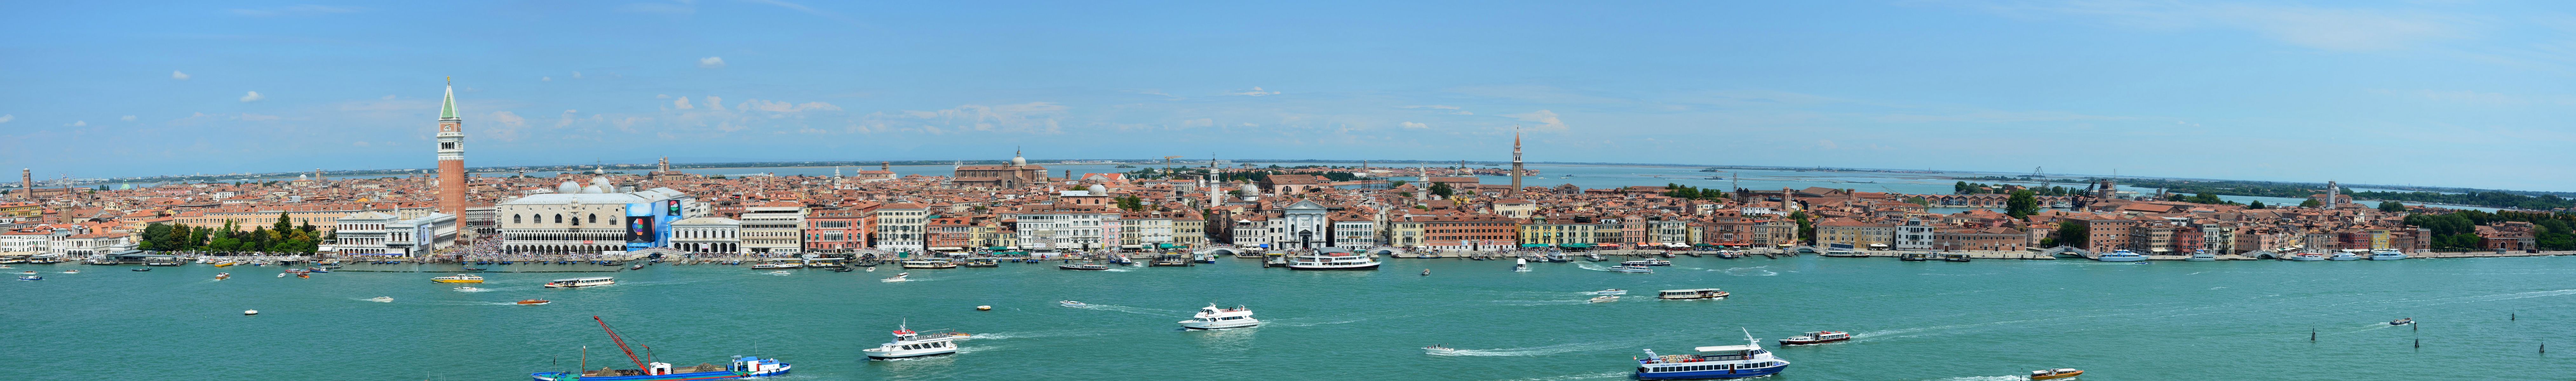 General view - Venice.jpg